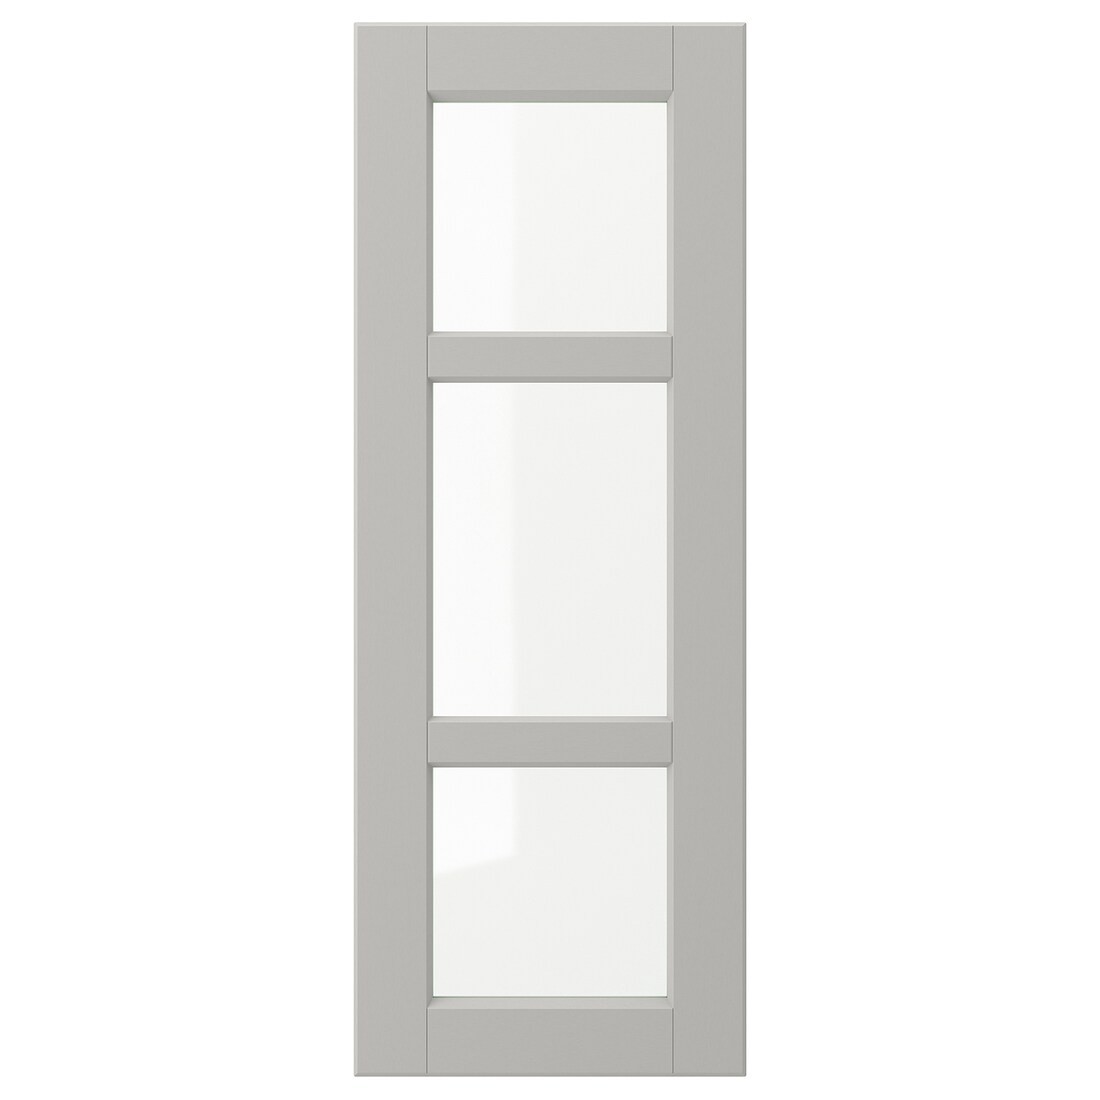 IKEA LERHYTTAN ЛЕРХЮТТАН Стеклянная дверь, светло-серый, 30x80 см 00461510 004.615.10